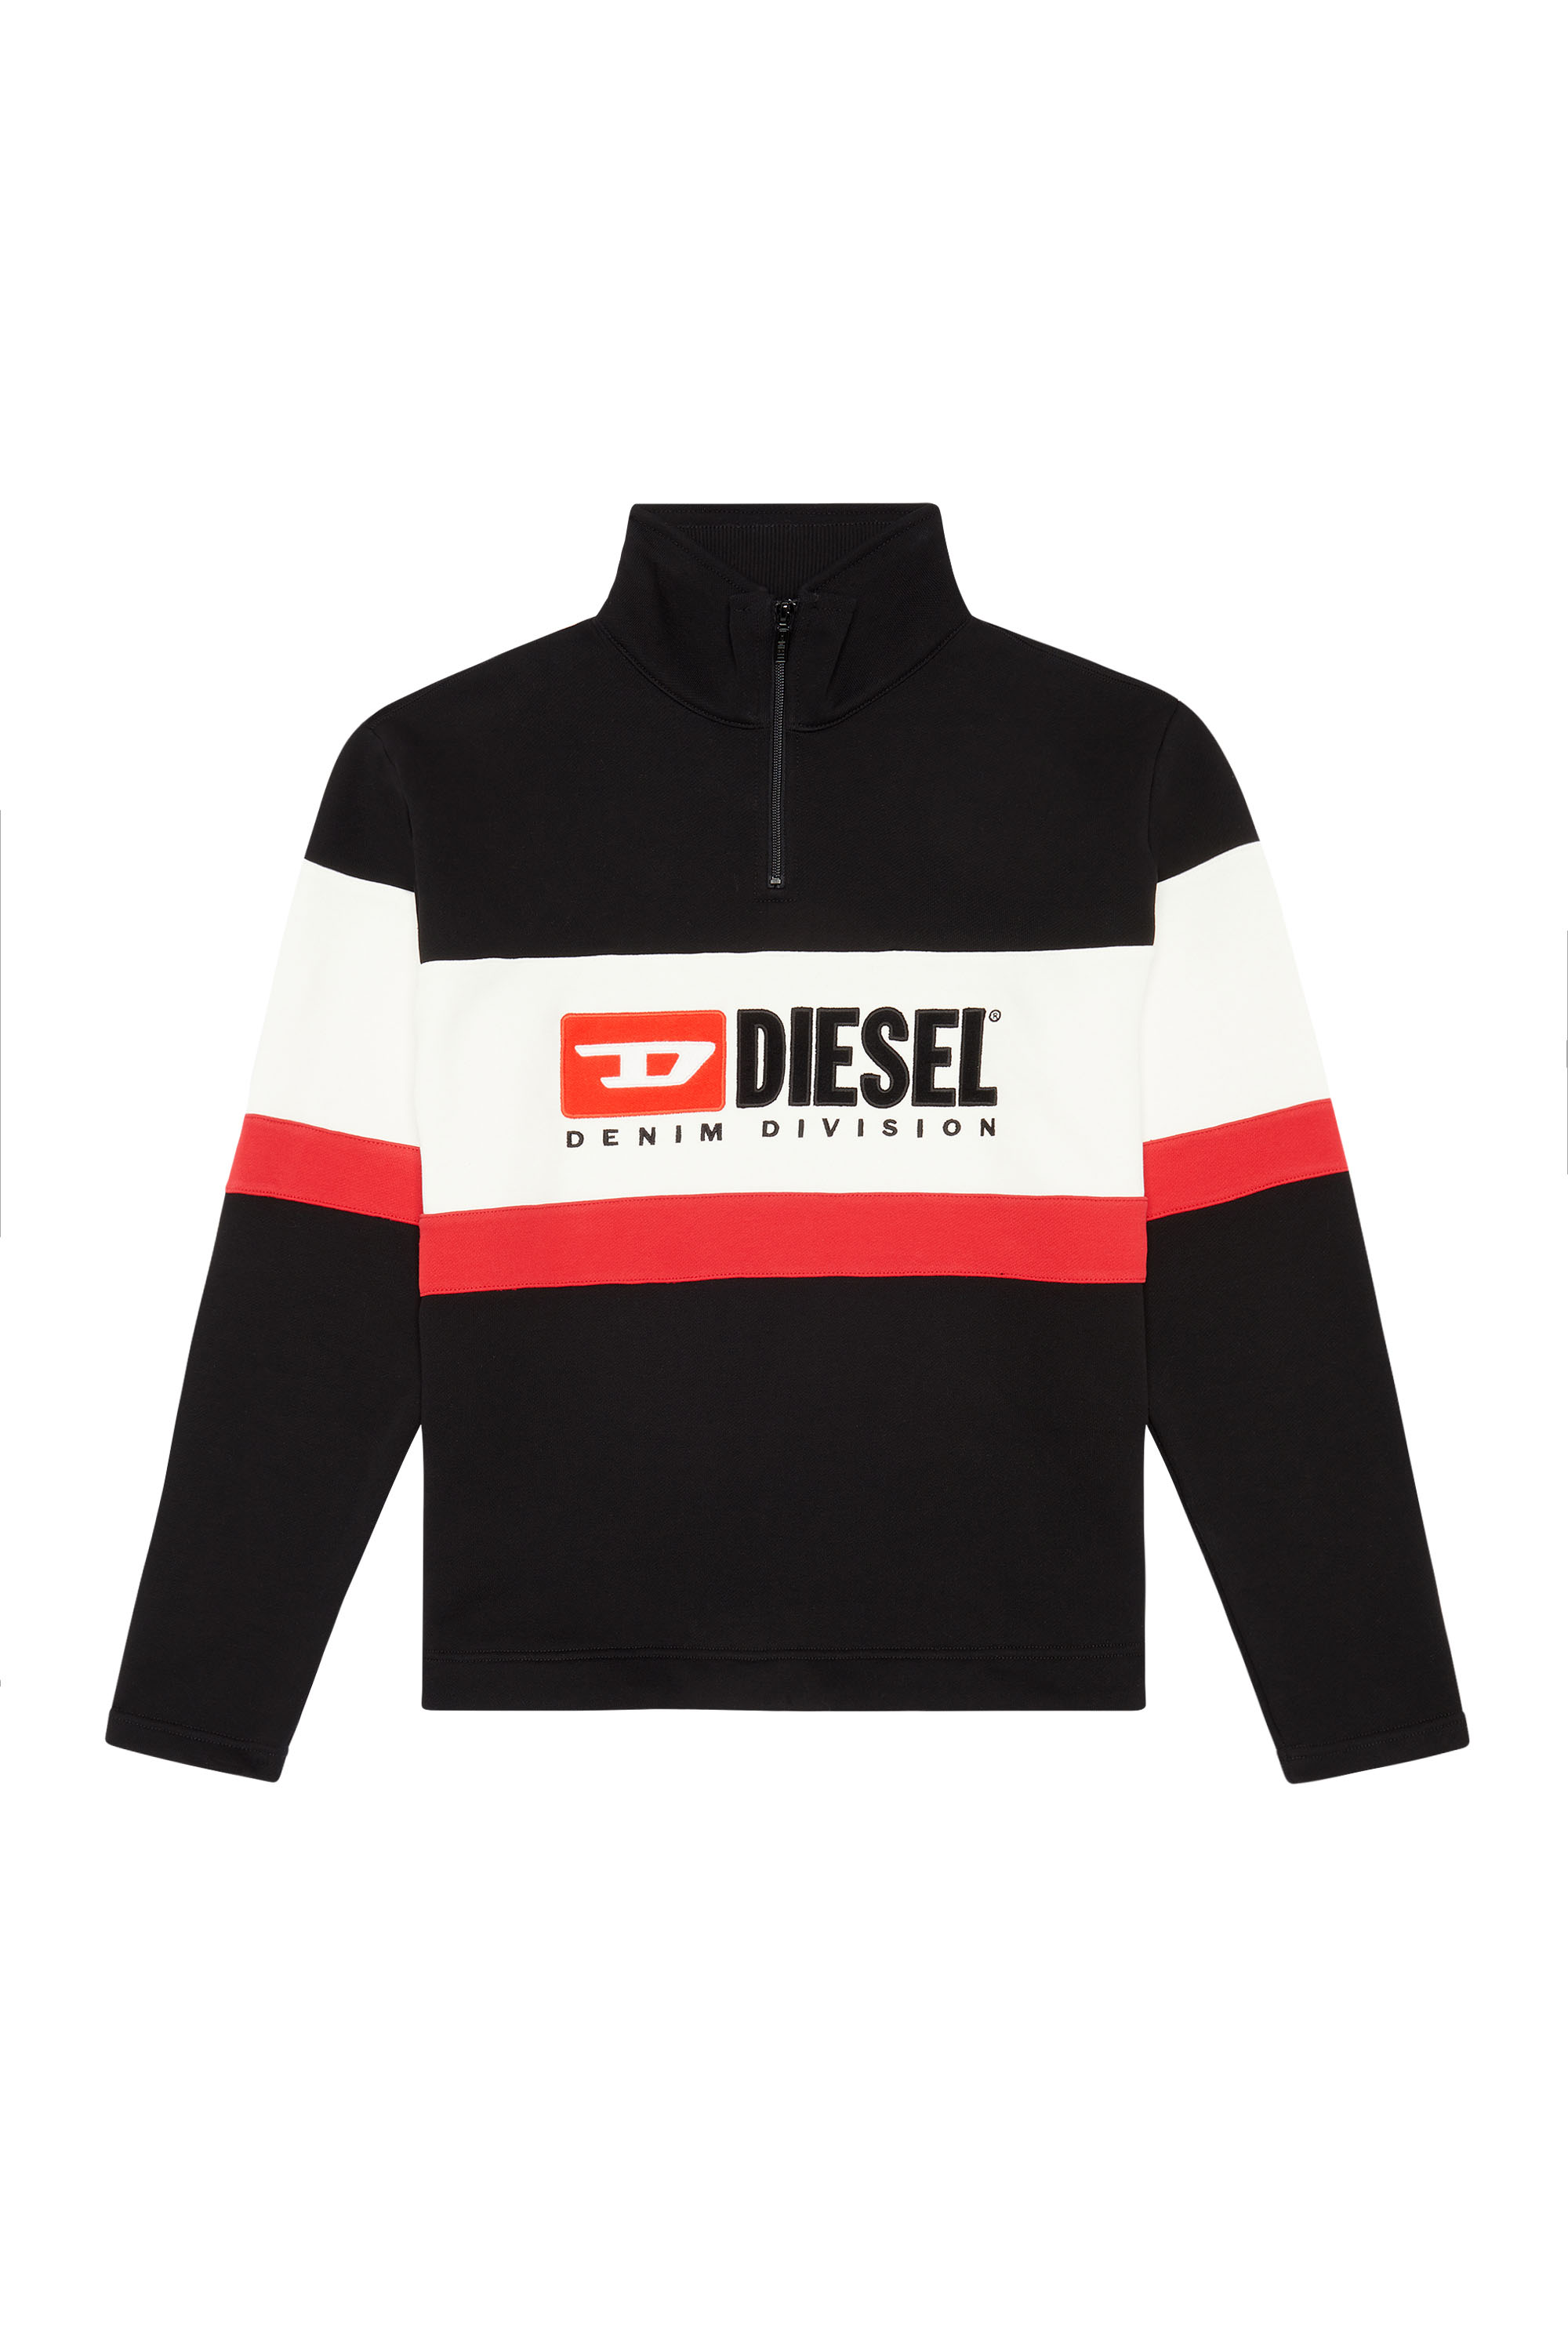 Diesel - S-SAINT-DIVISION, Black - Image 5